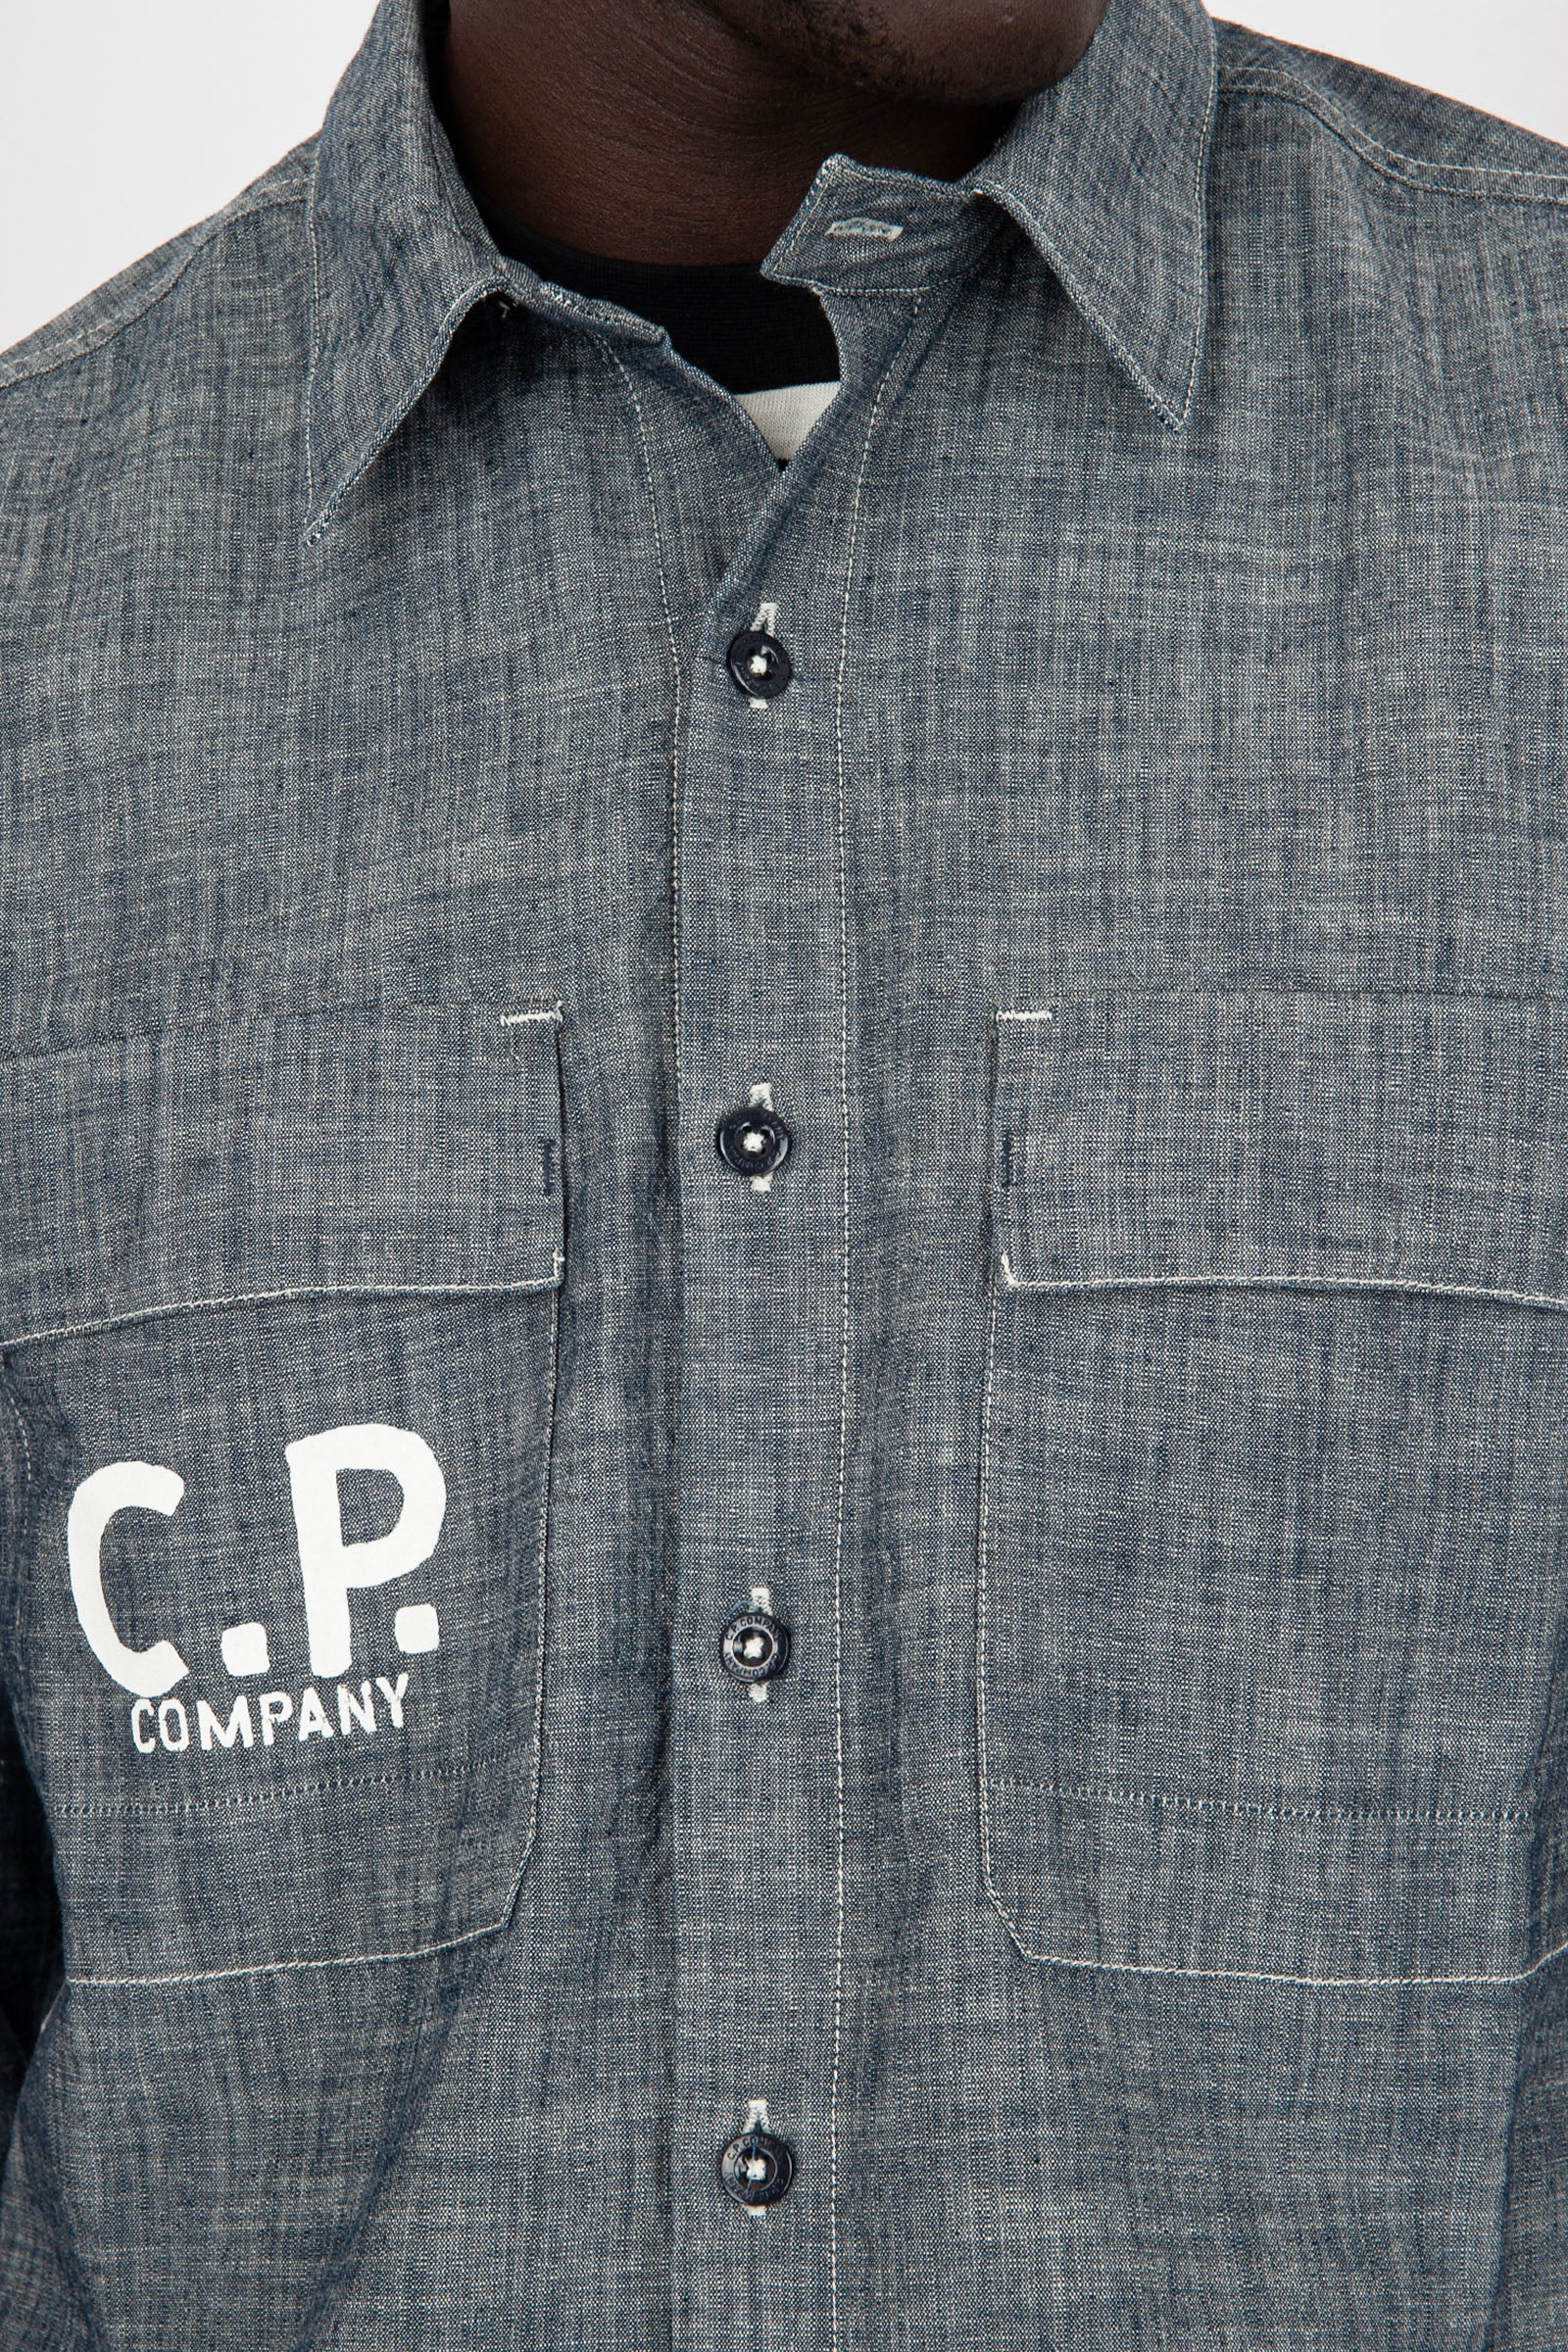 C.P. Company Chambray Cotton Logo Shirt in Blue - 6